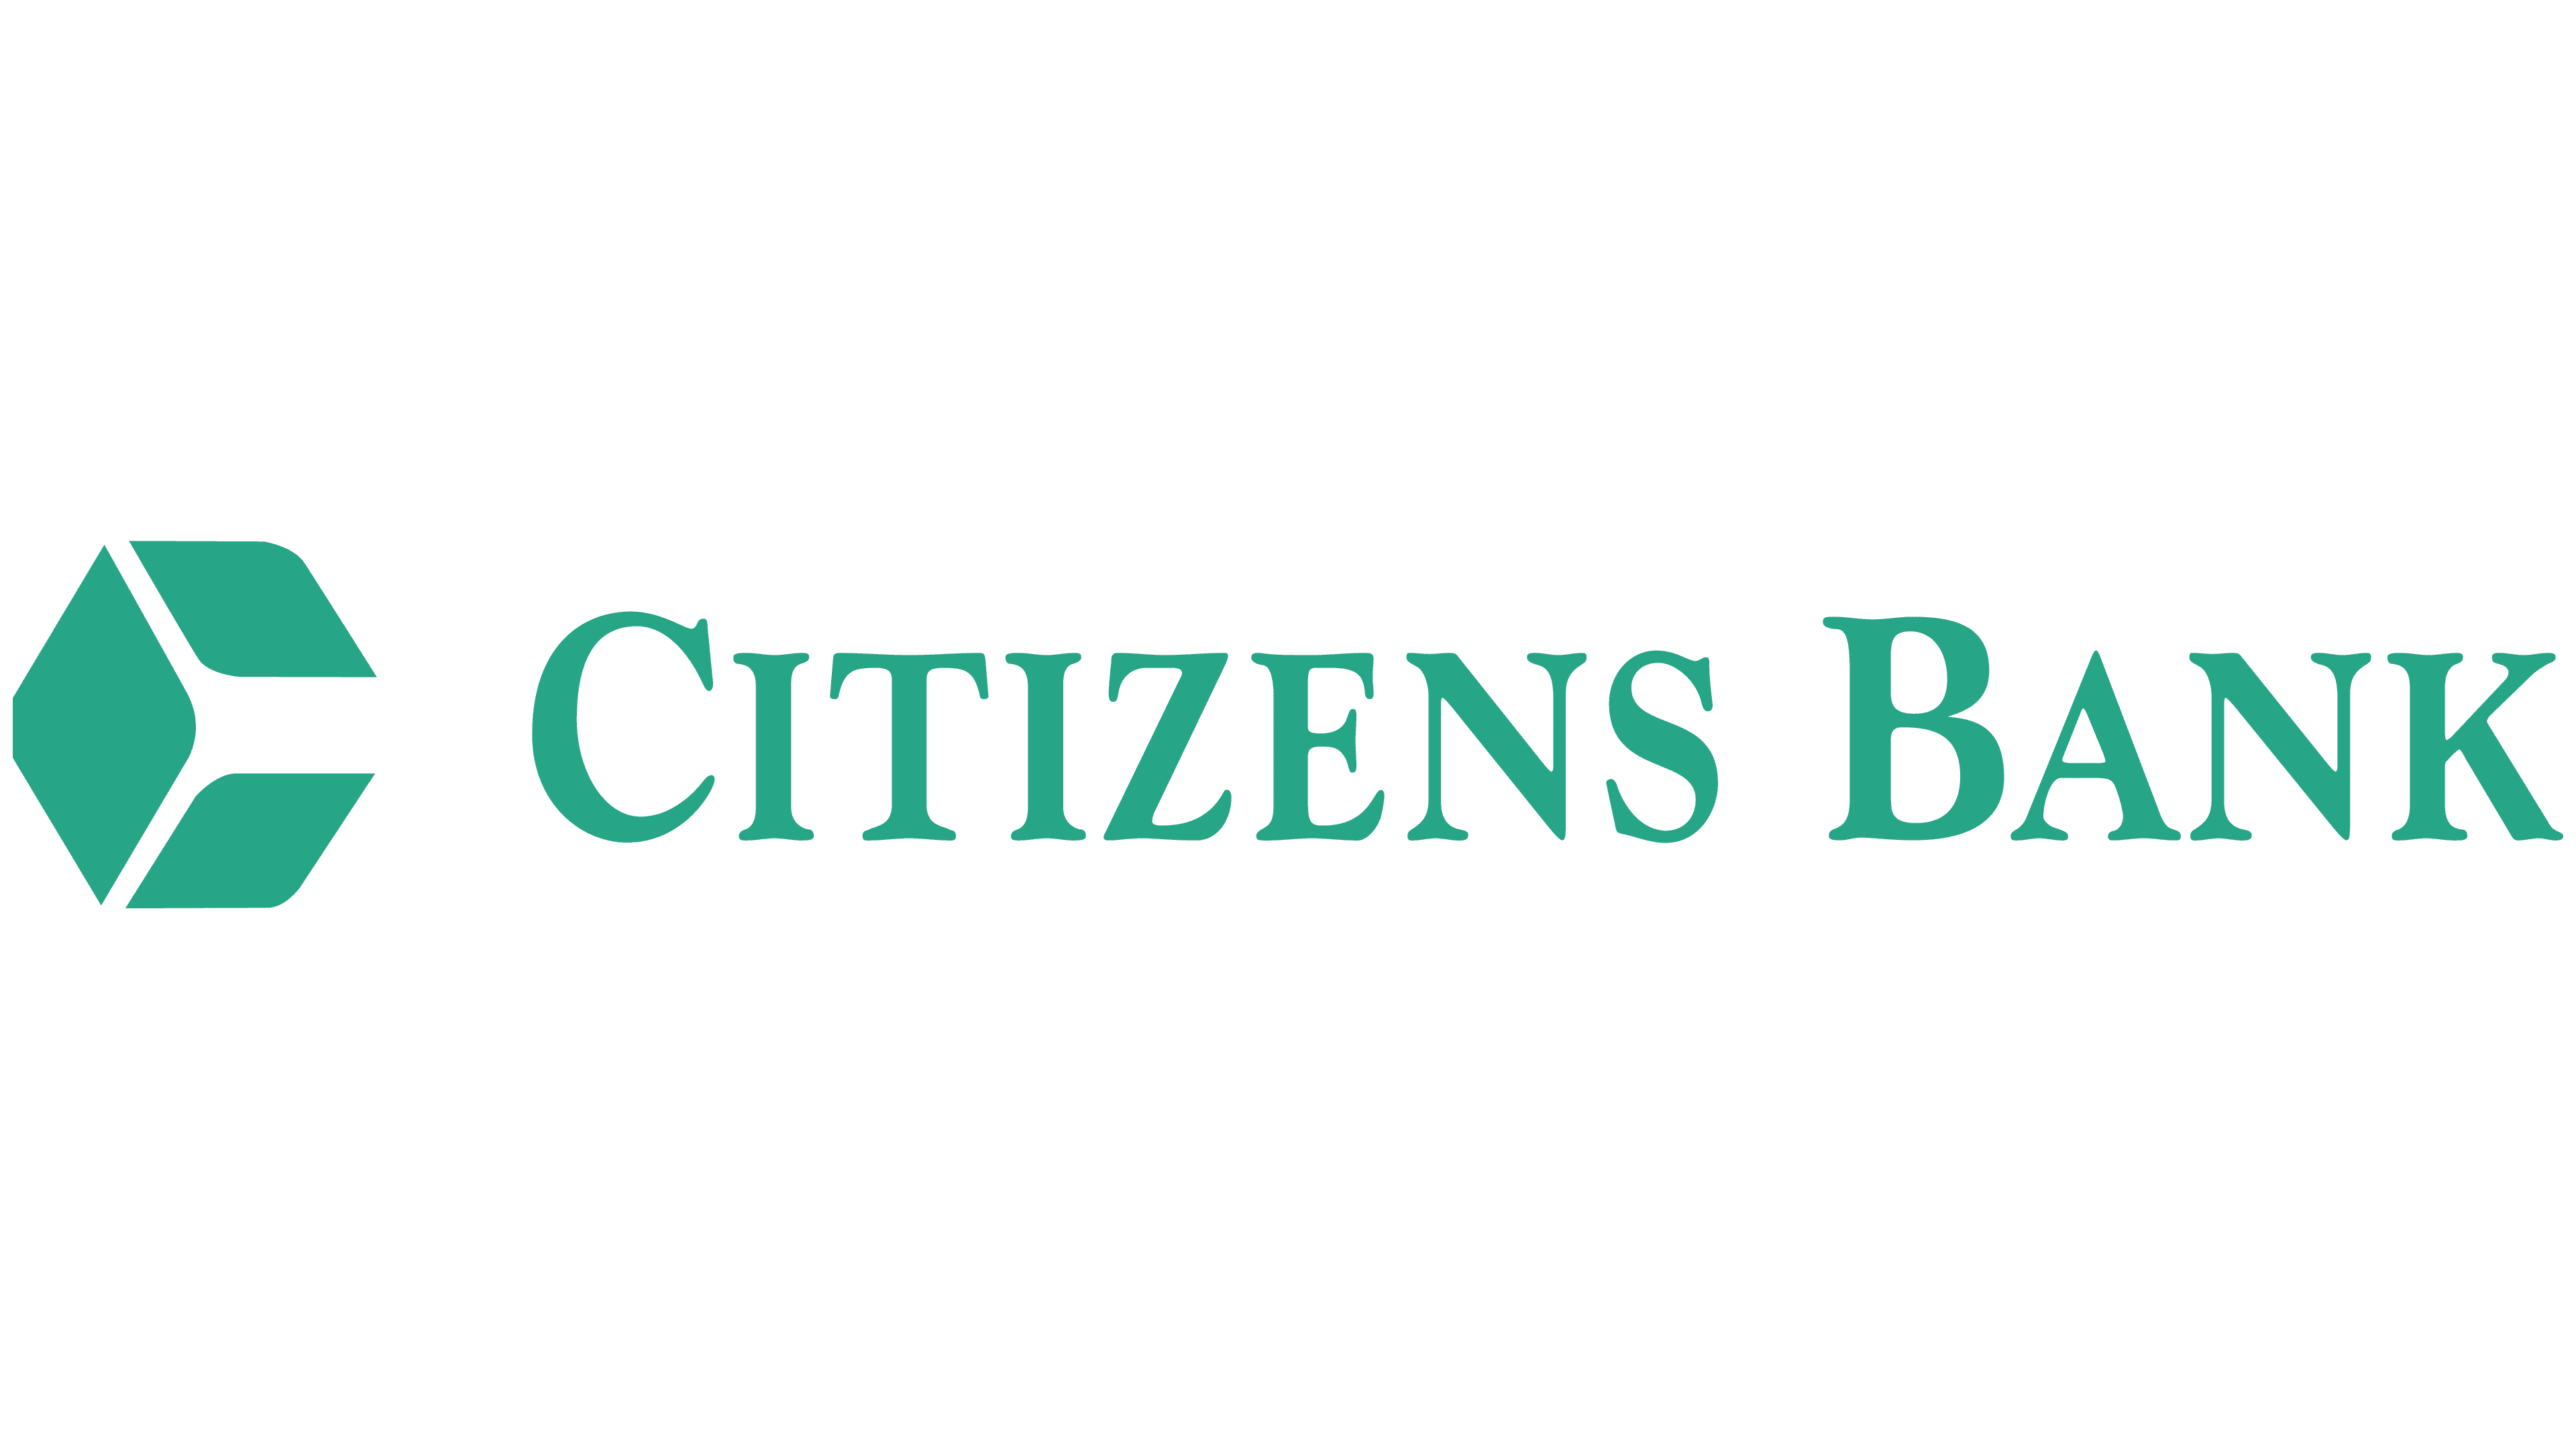 citizens national bank logo